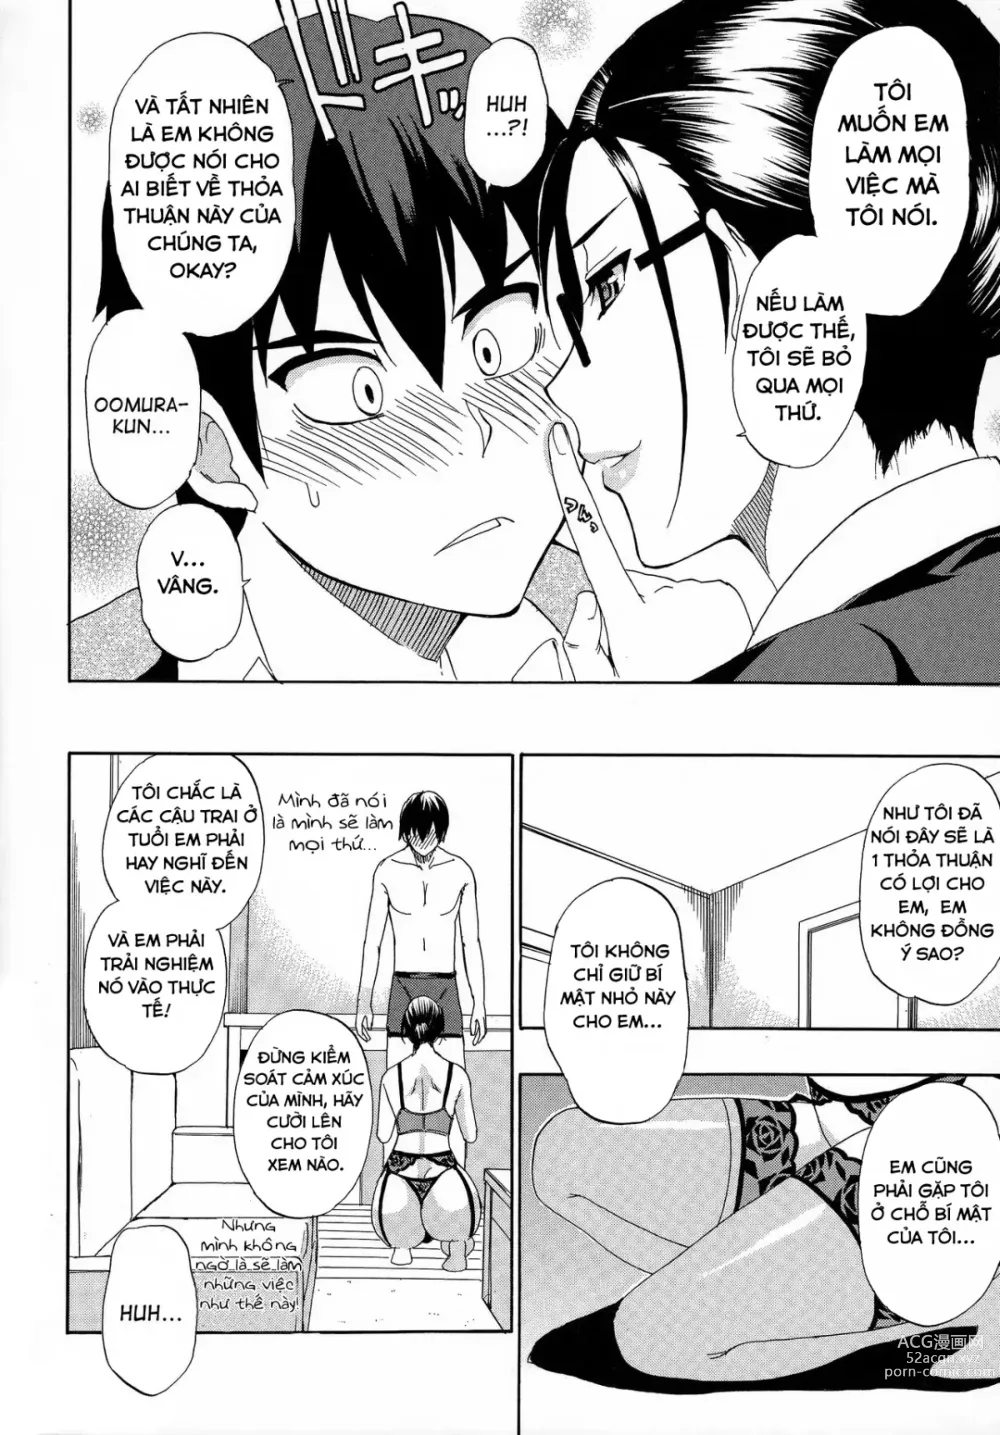 Page 8 of manga PETLIFE